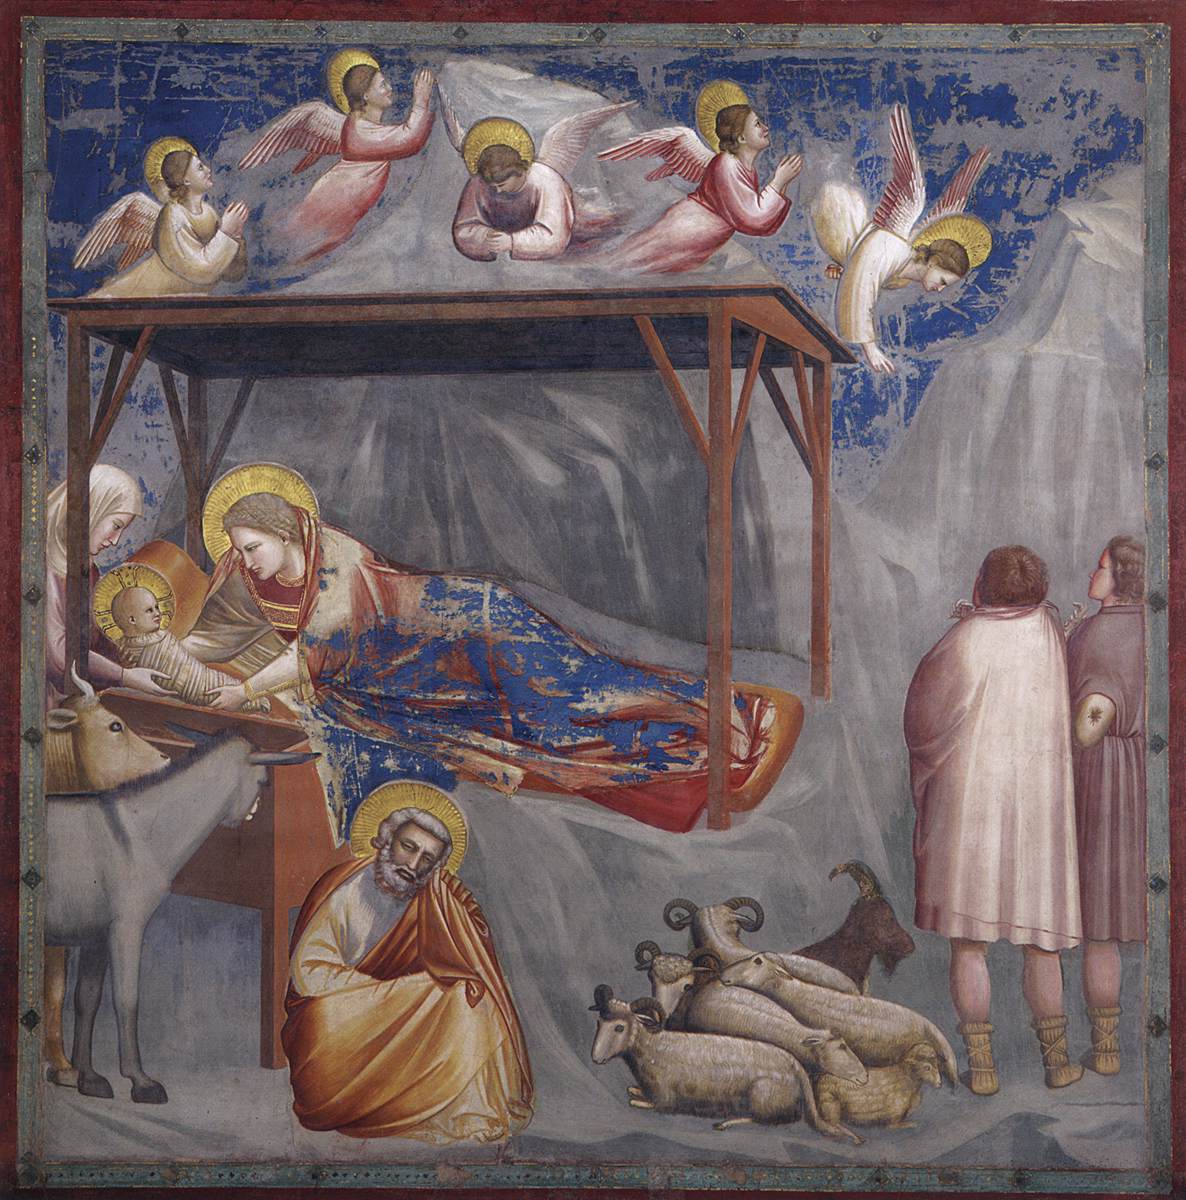 Nr. 17 scener af Kristi liv: 1 Nativity: Kristi fødsel